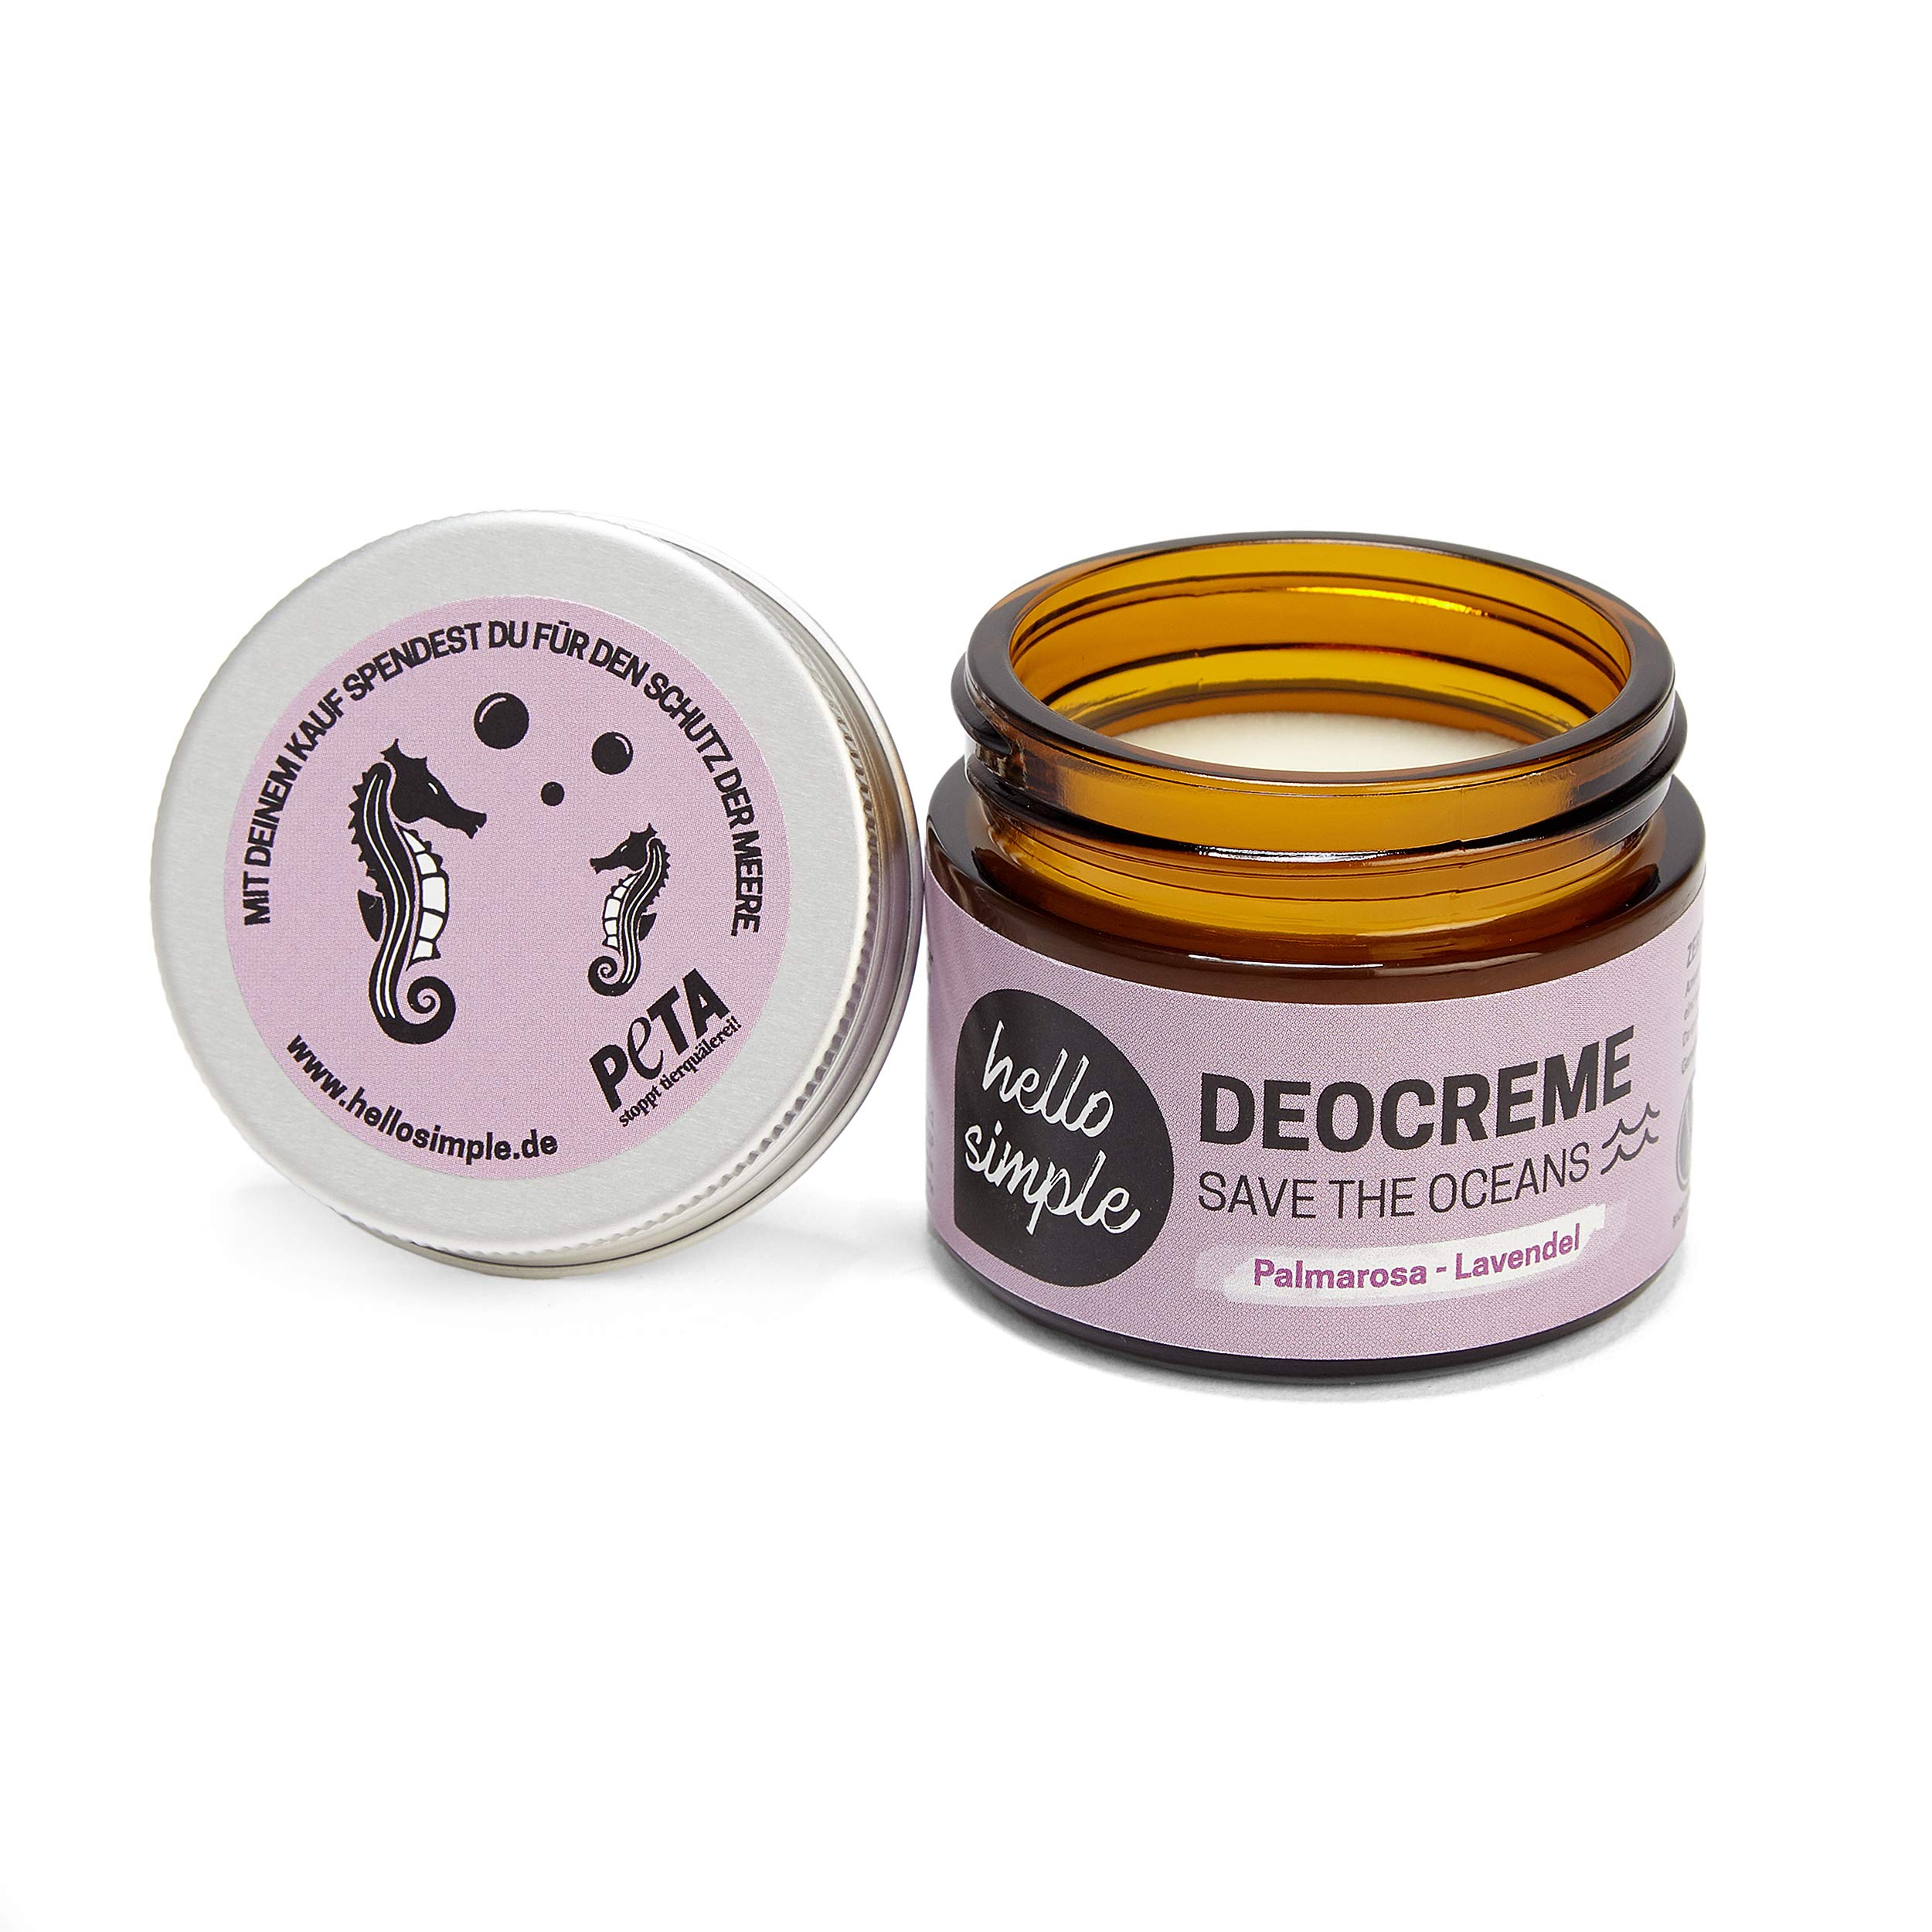 hello simple - Deocreme Deodorant Deo Creme (50 g) - SAVE THE OCEANS! - nachhaltige und zertifizierte Naturkosmetik - Deo Frauen Männer - ohne Aluminium, vegan, bio, plastikfrei(Palmarosa-Lavendel)